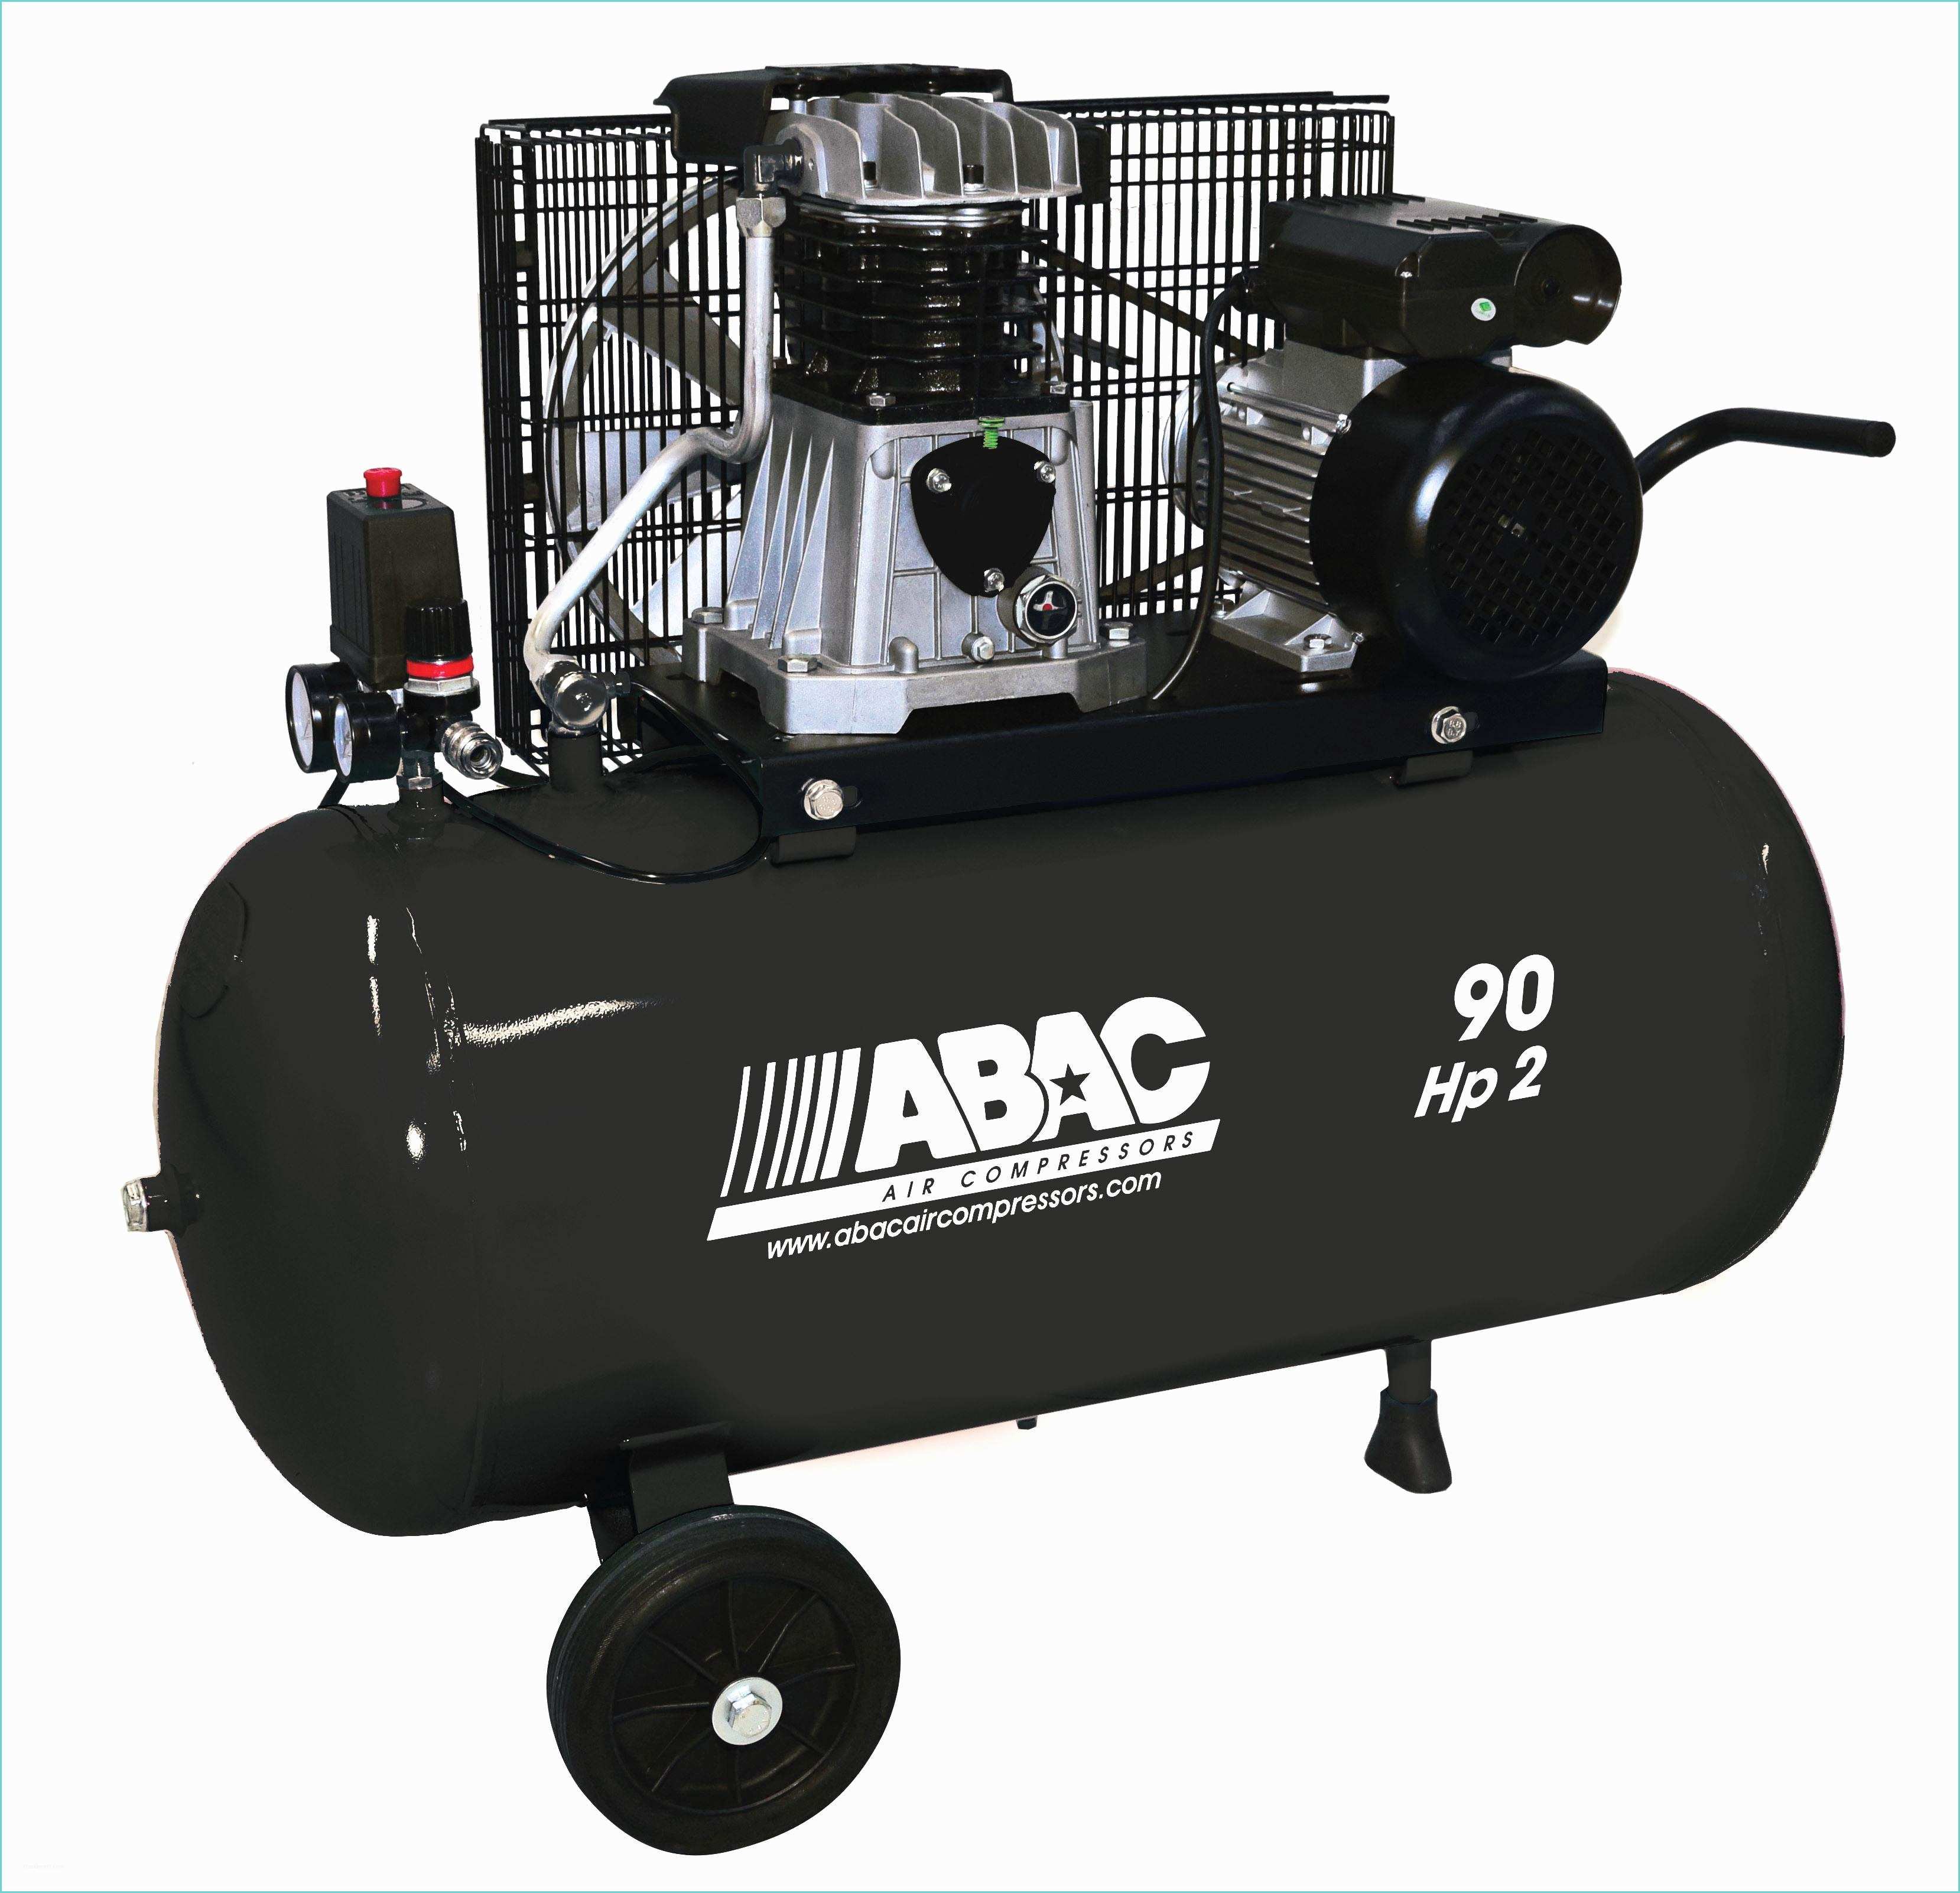 Compressore Abac 50 Litri A Cinghia Pressore A Cinghia 90 Lt Abac 2 Hp B26 90 Pressione 10